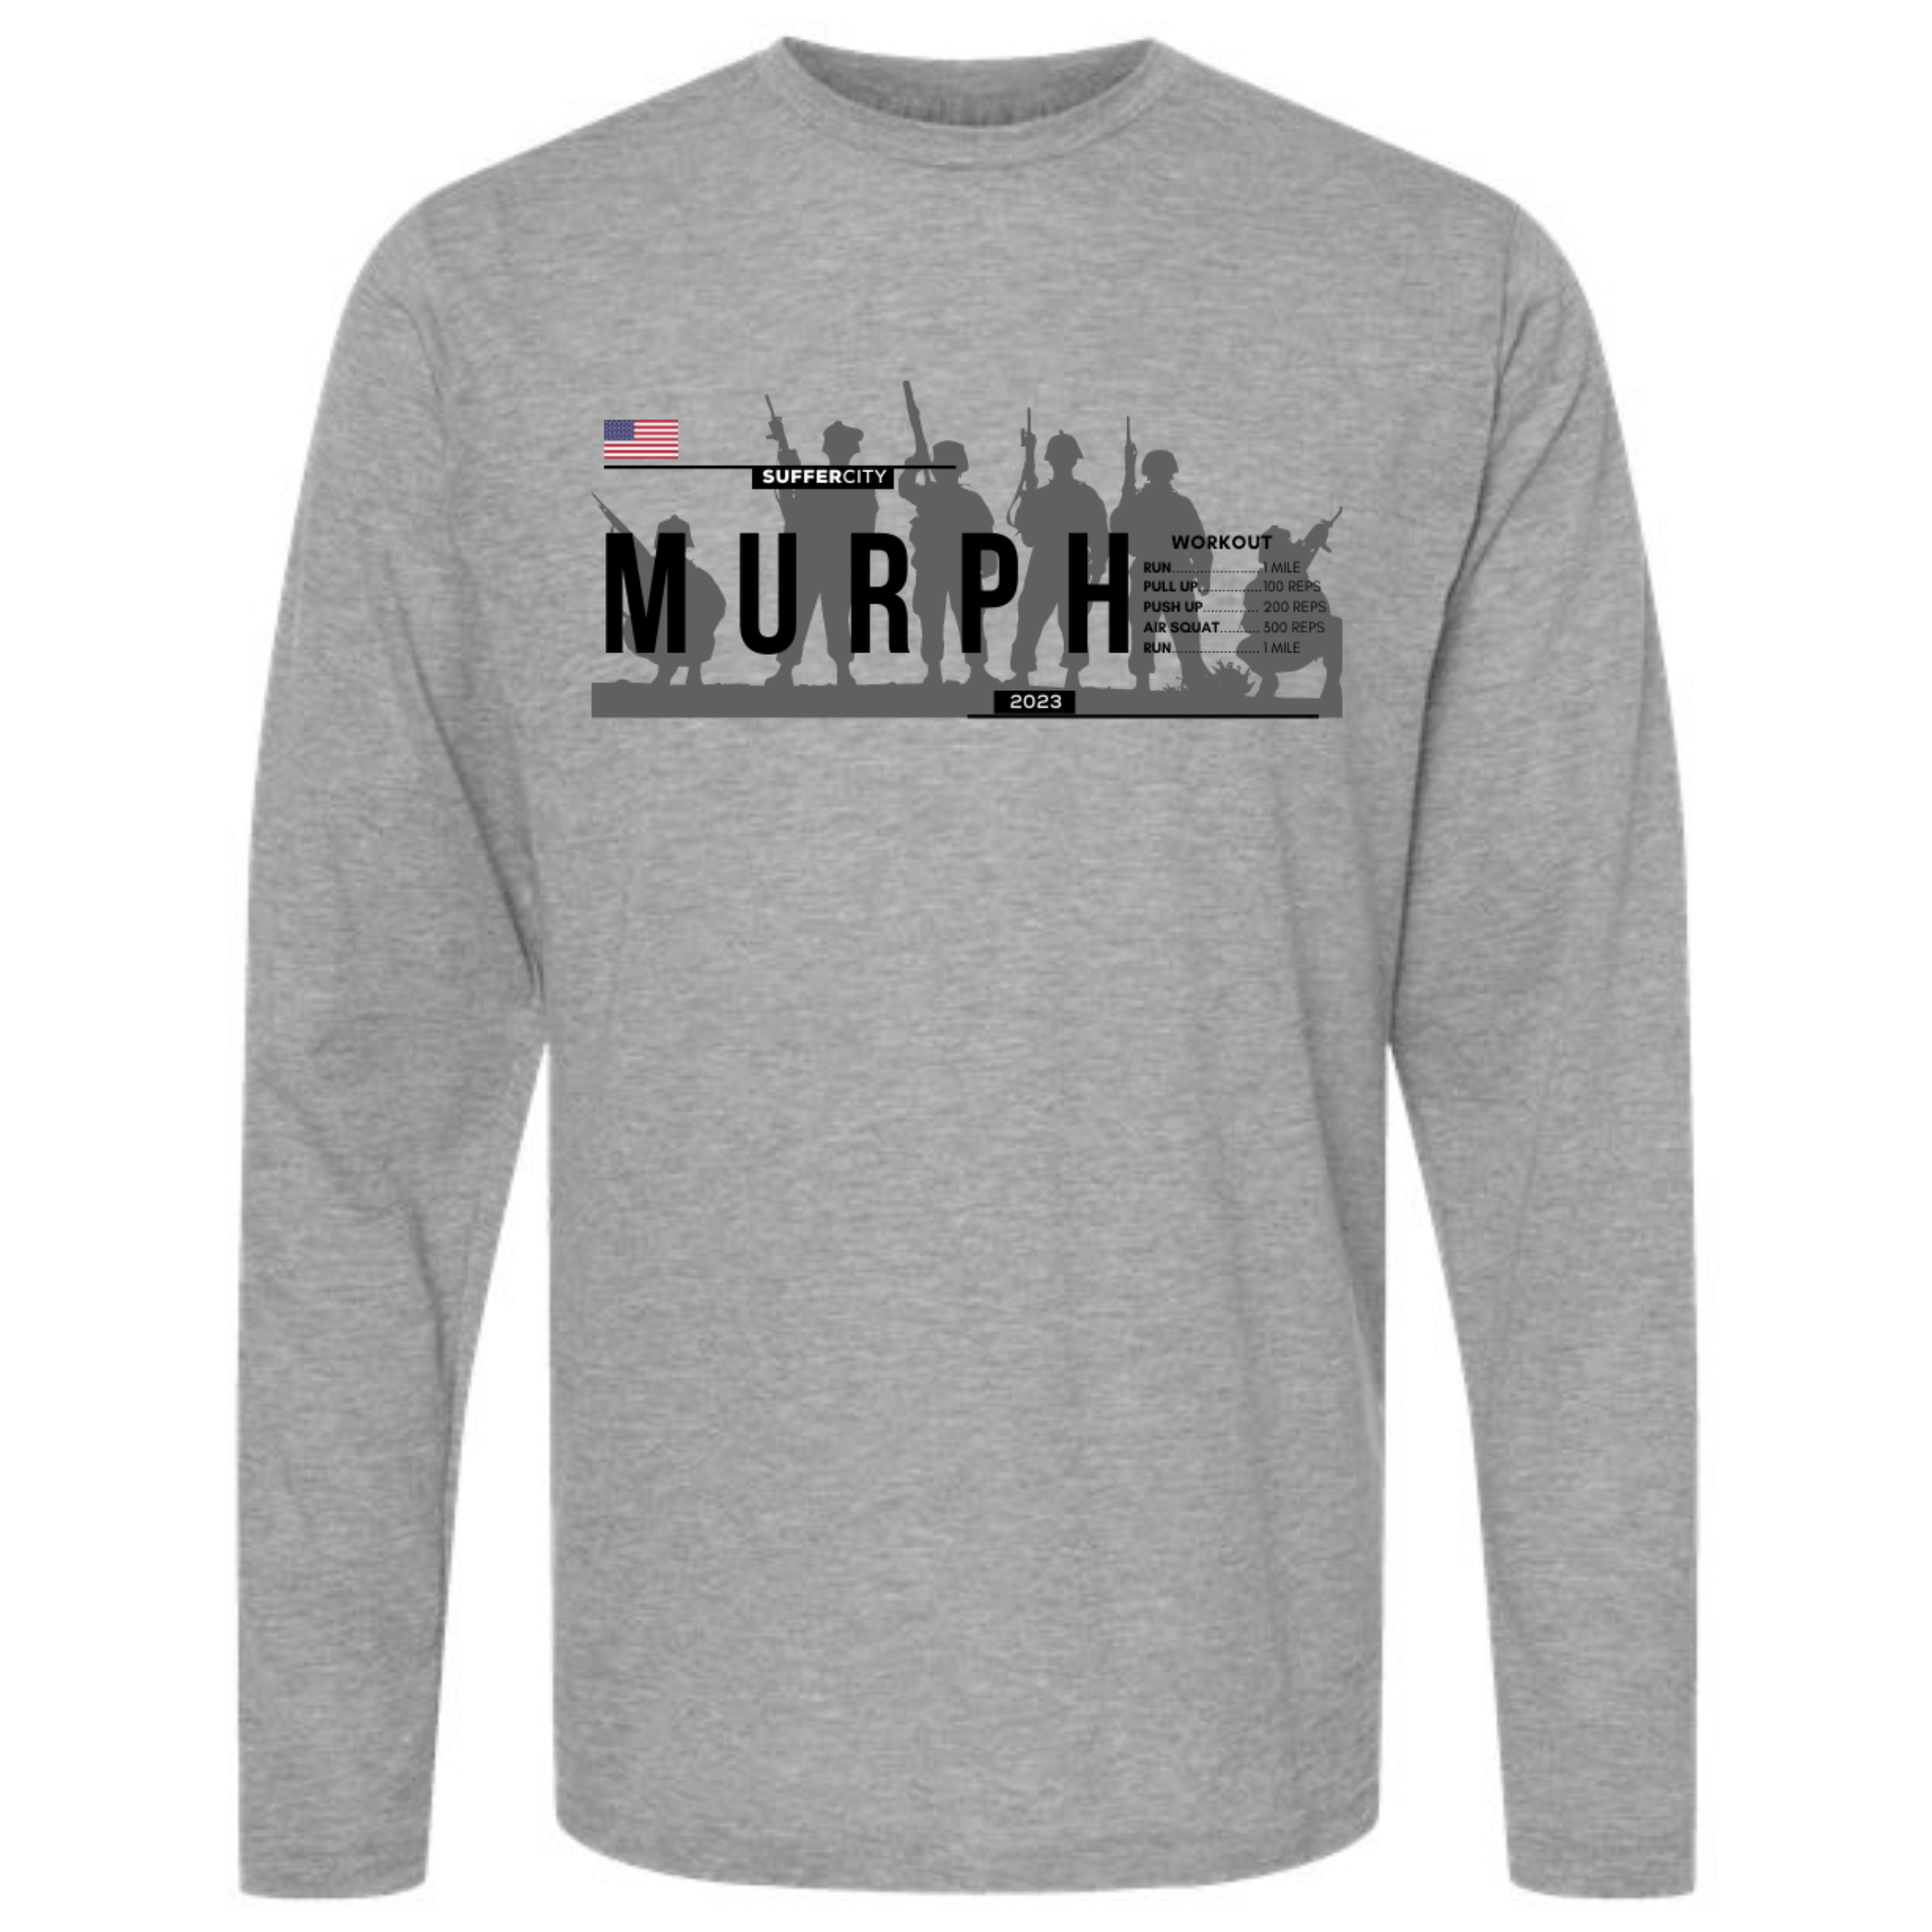 Murph “Warmer" Options